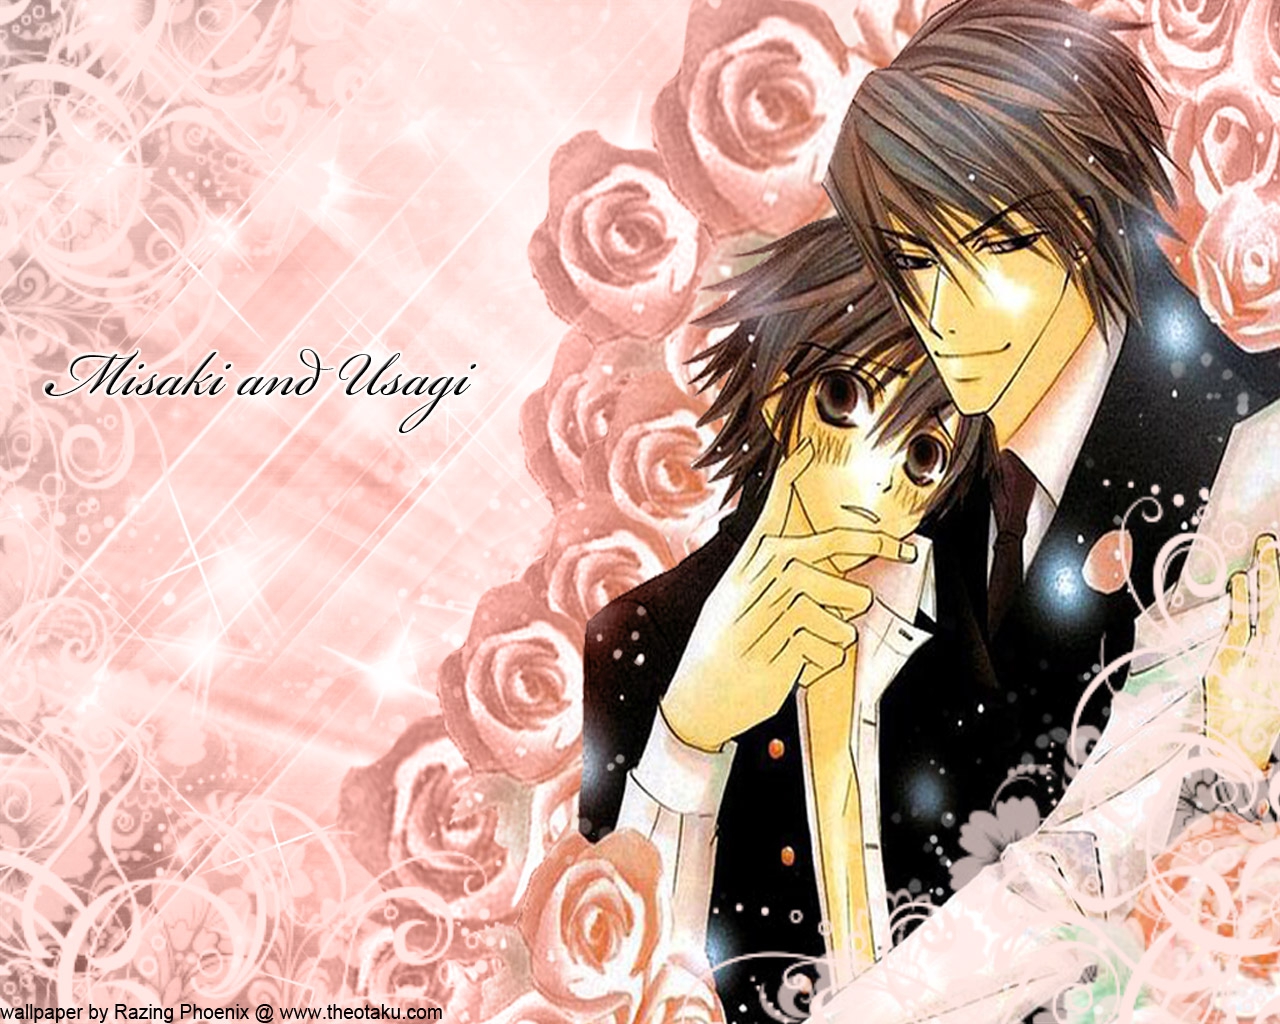 Junjou Romantica Anime Wallpaper